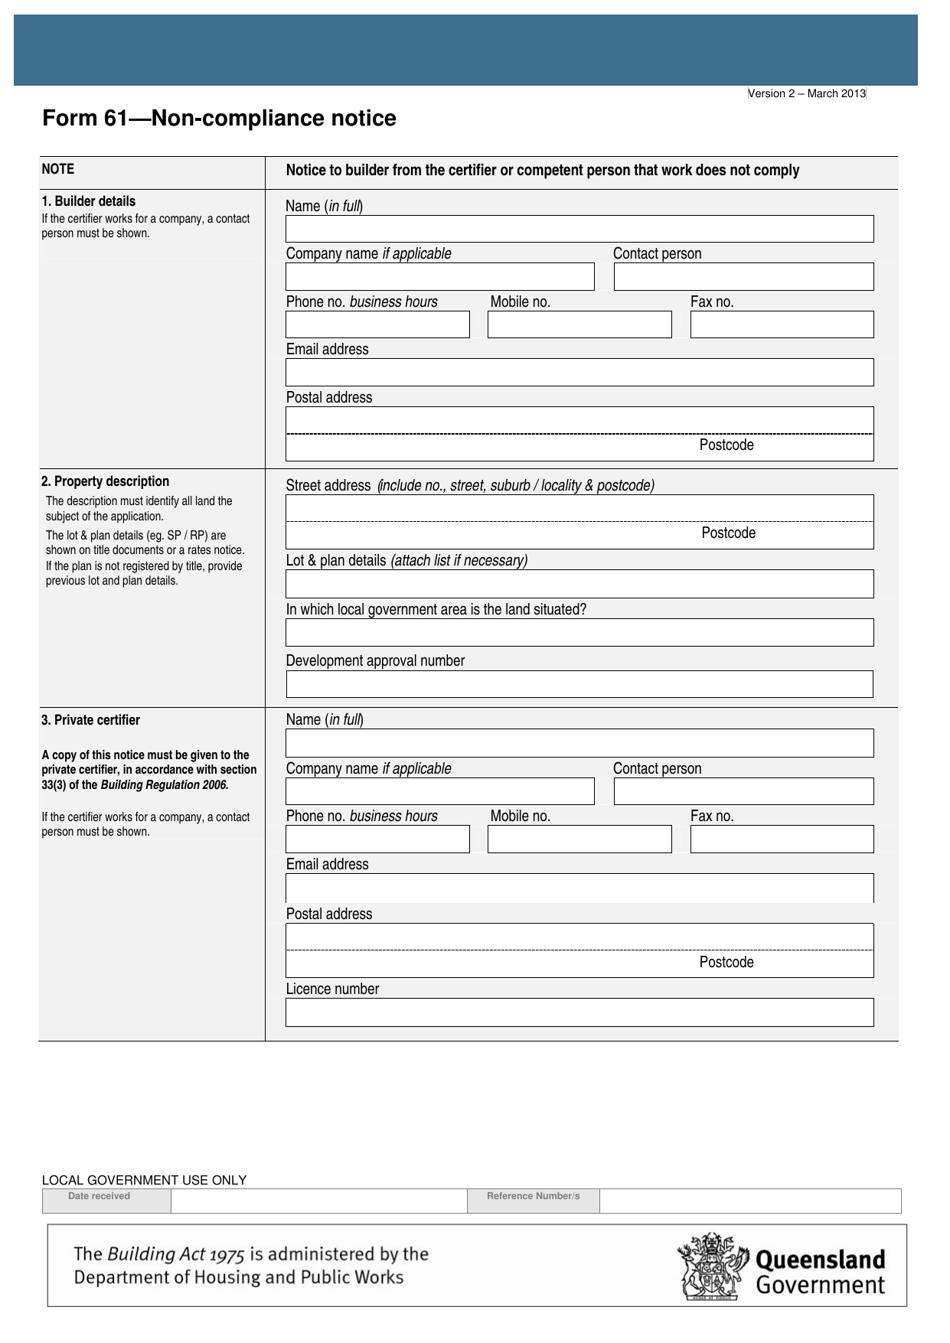 Form 61 Non-compliance Notice - Queensland, Australia, Page 1